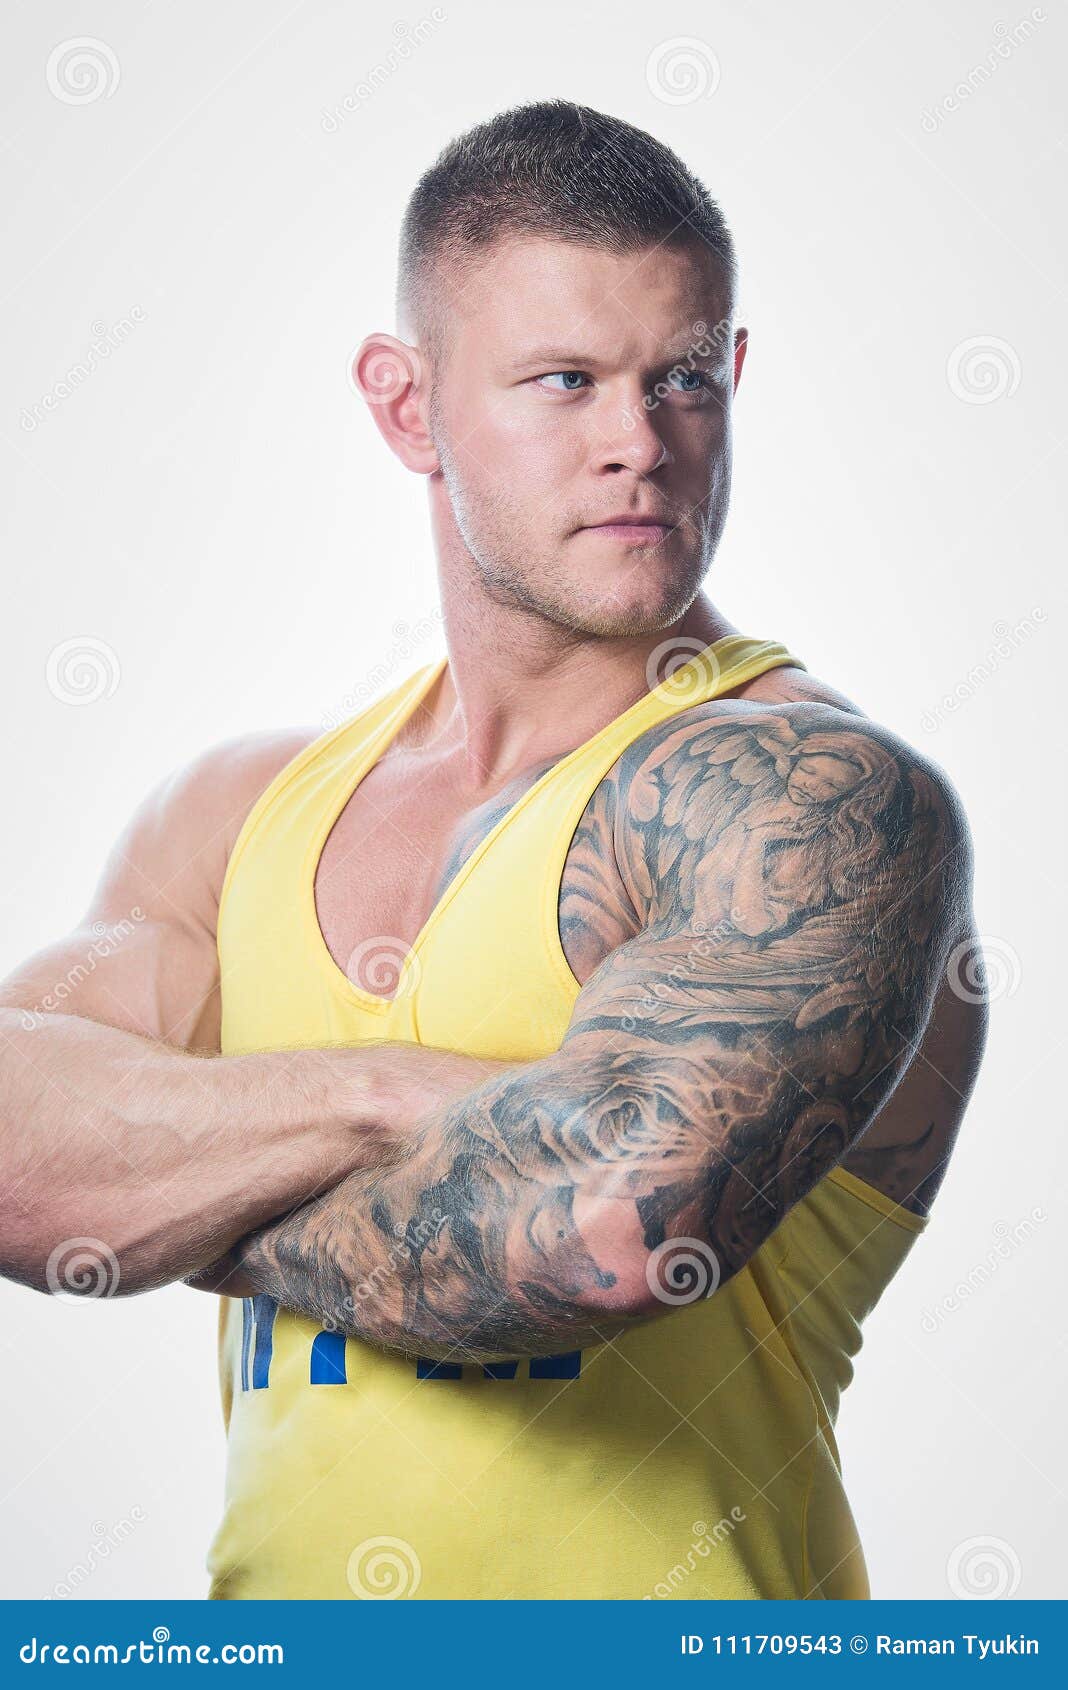 https://thumbs.dreamstime.com/z/muscular-man-blue-eyes-tattoo-yellow-tank-top-looking-away-white-background-muscular-man-blue-eyes-111709543.jpg